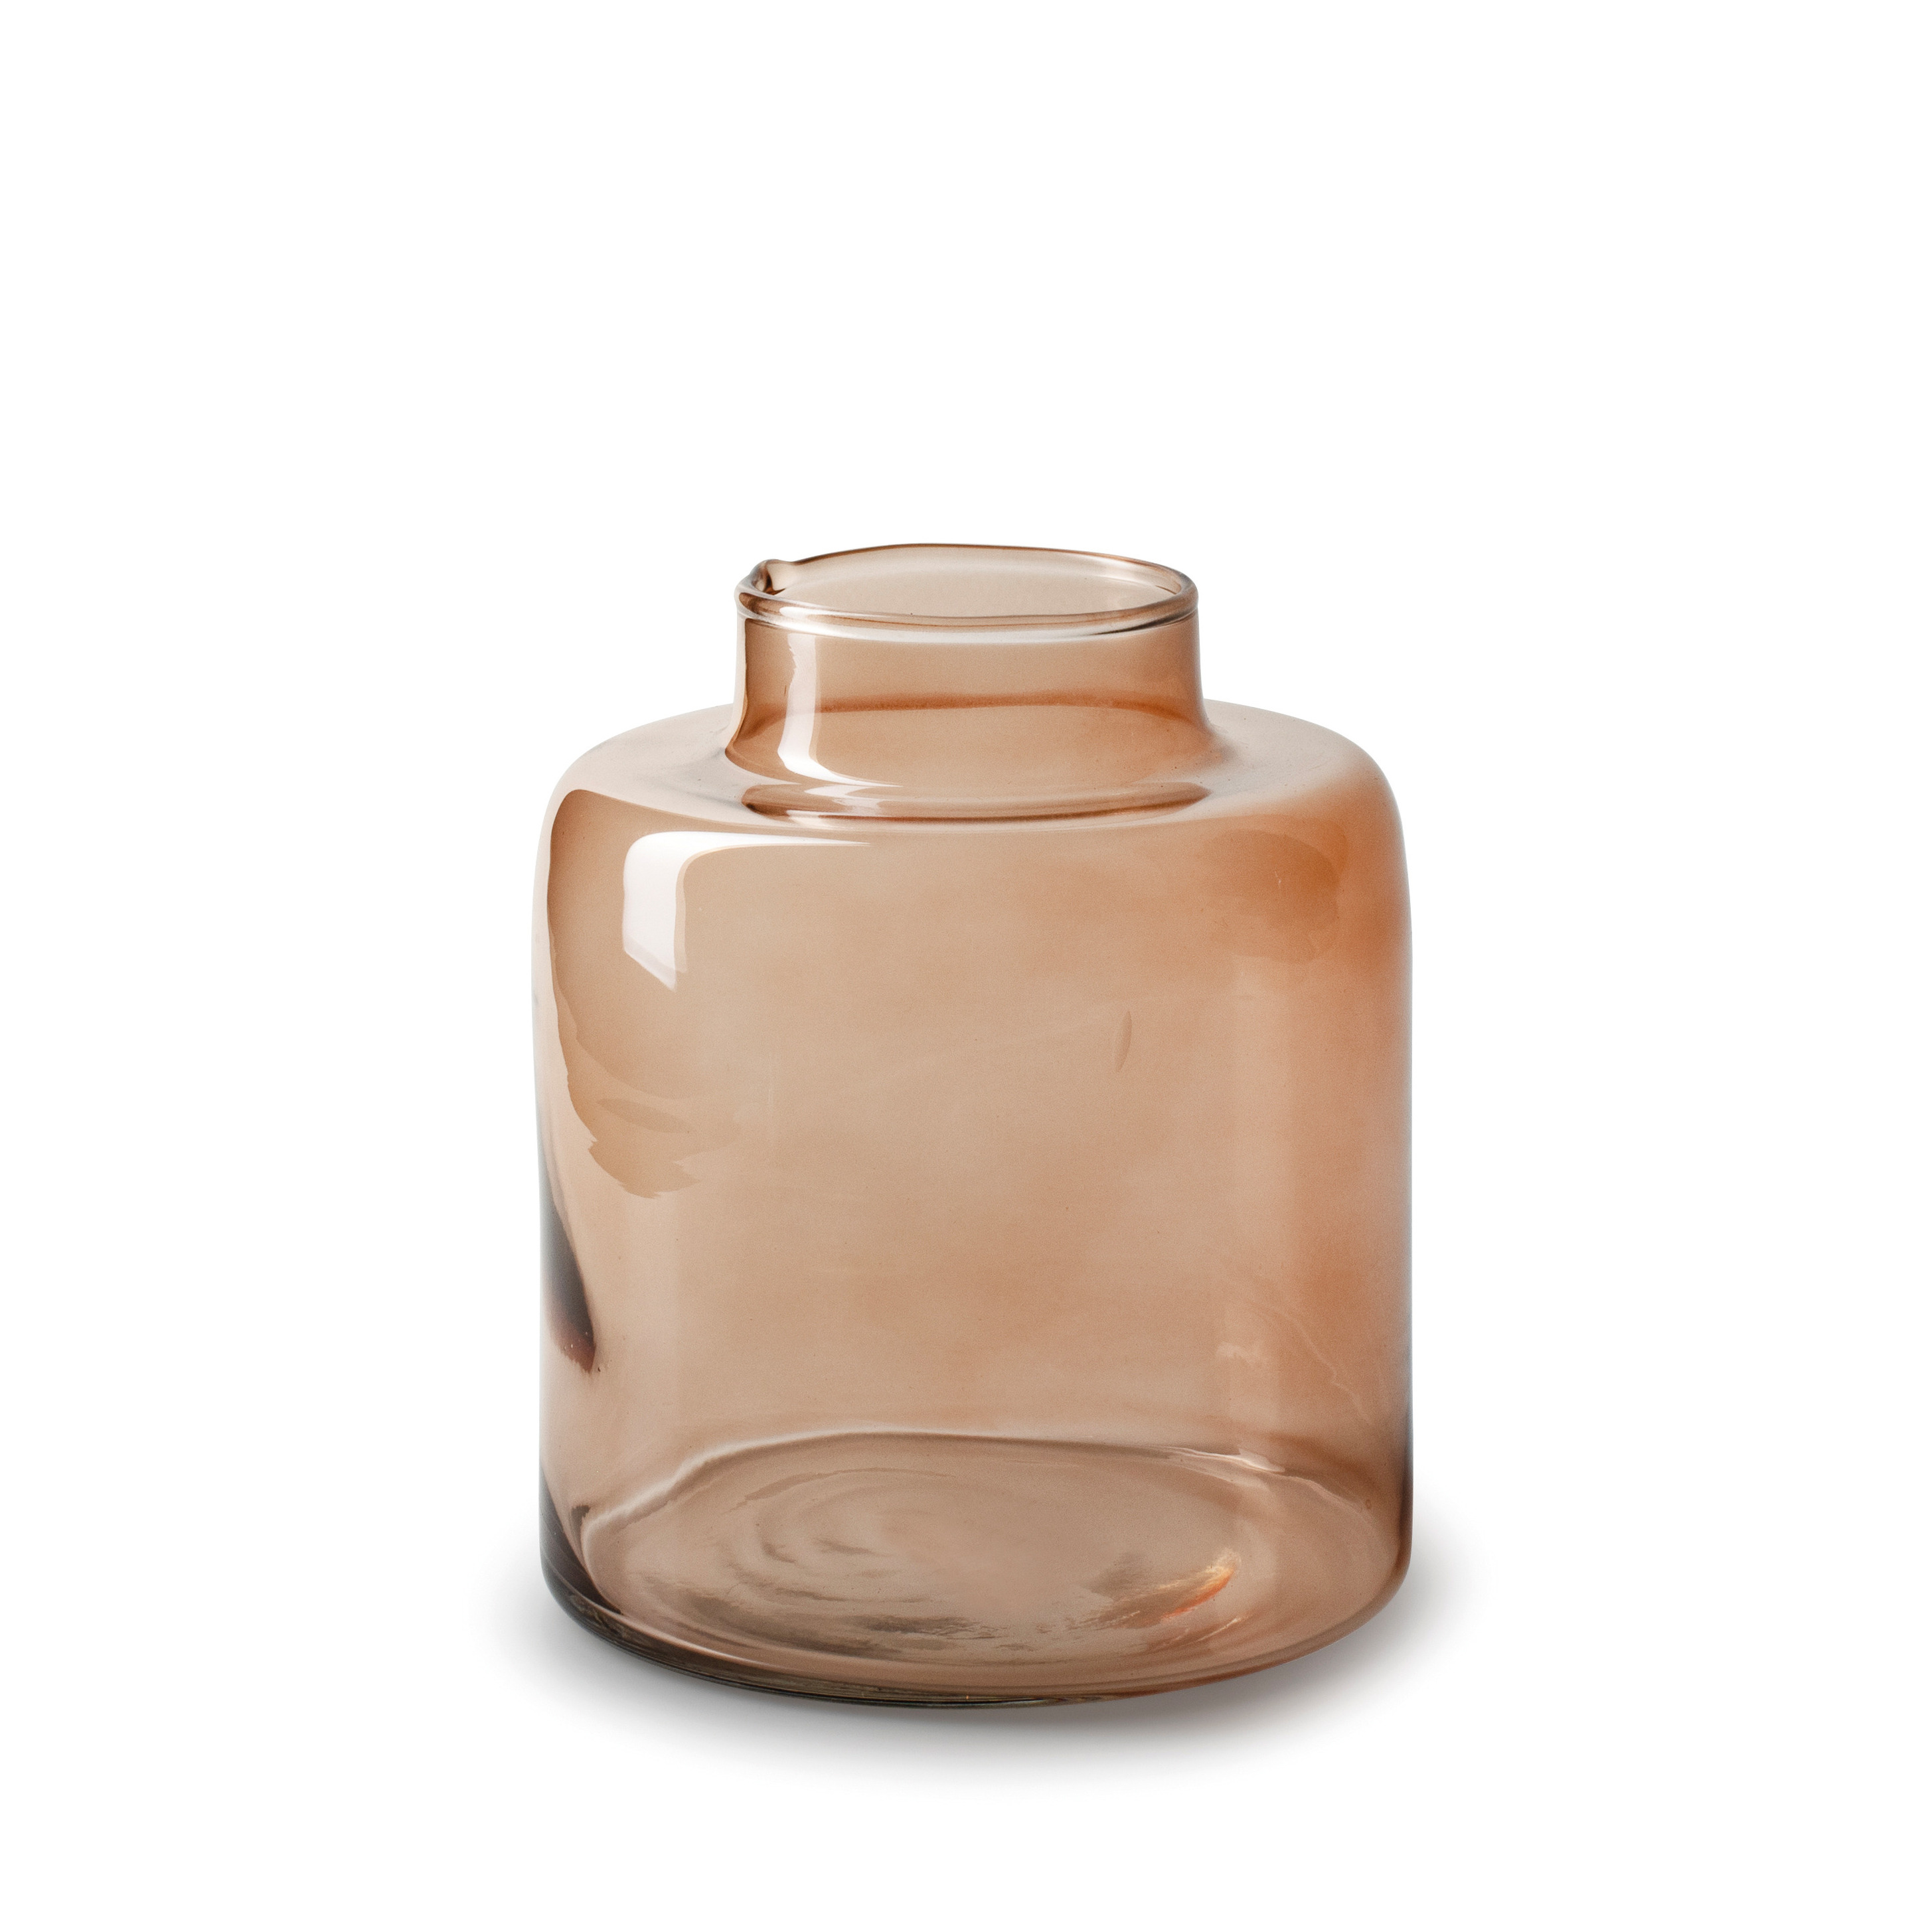 Jodeco Bloemenvaas Willem - transparant beige glas - D19 x H17 cm - fles vorm vaas -